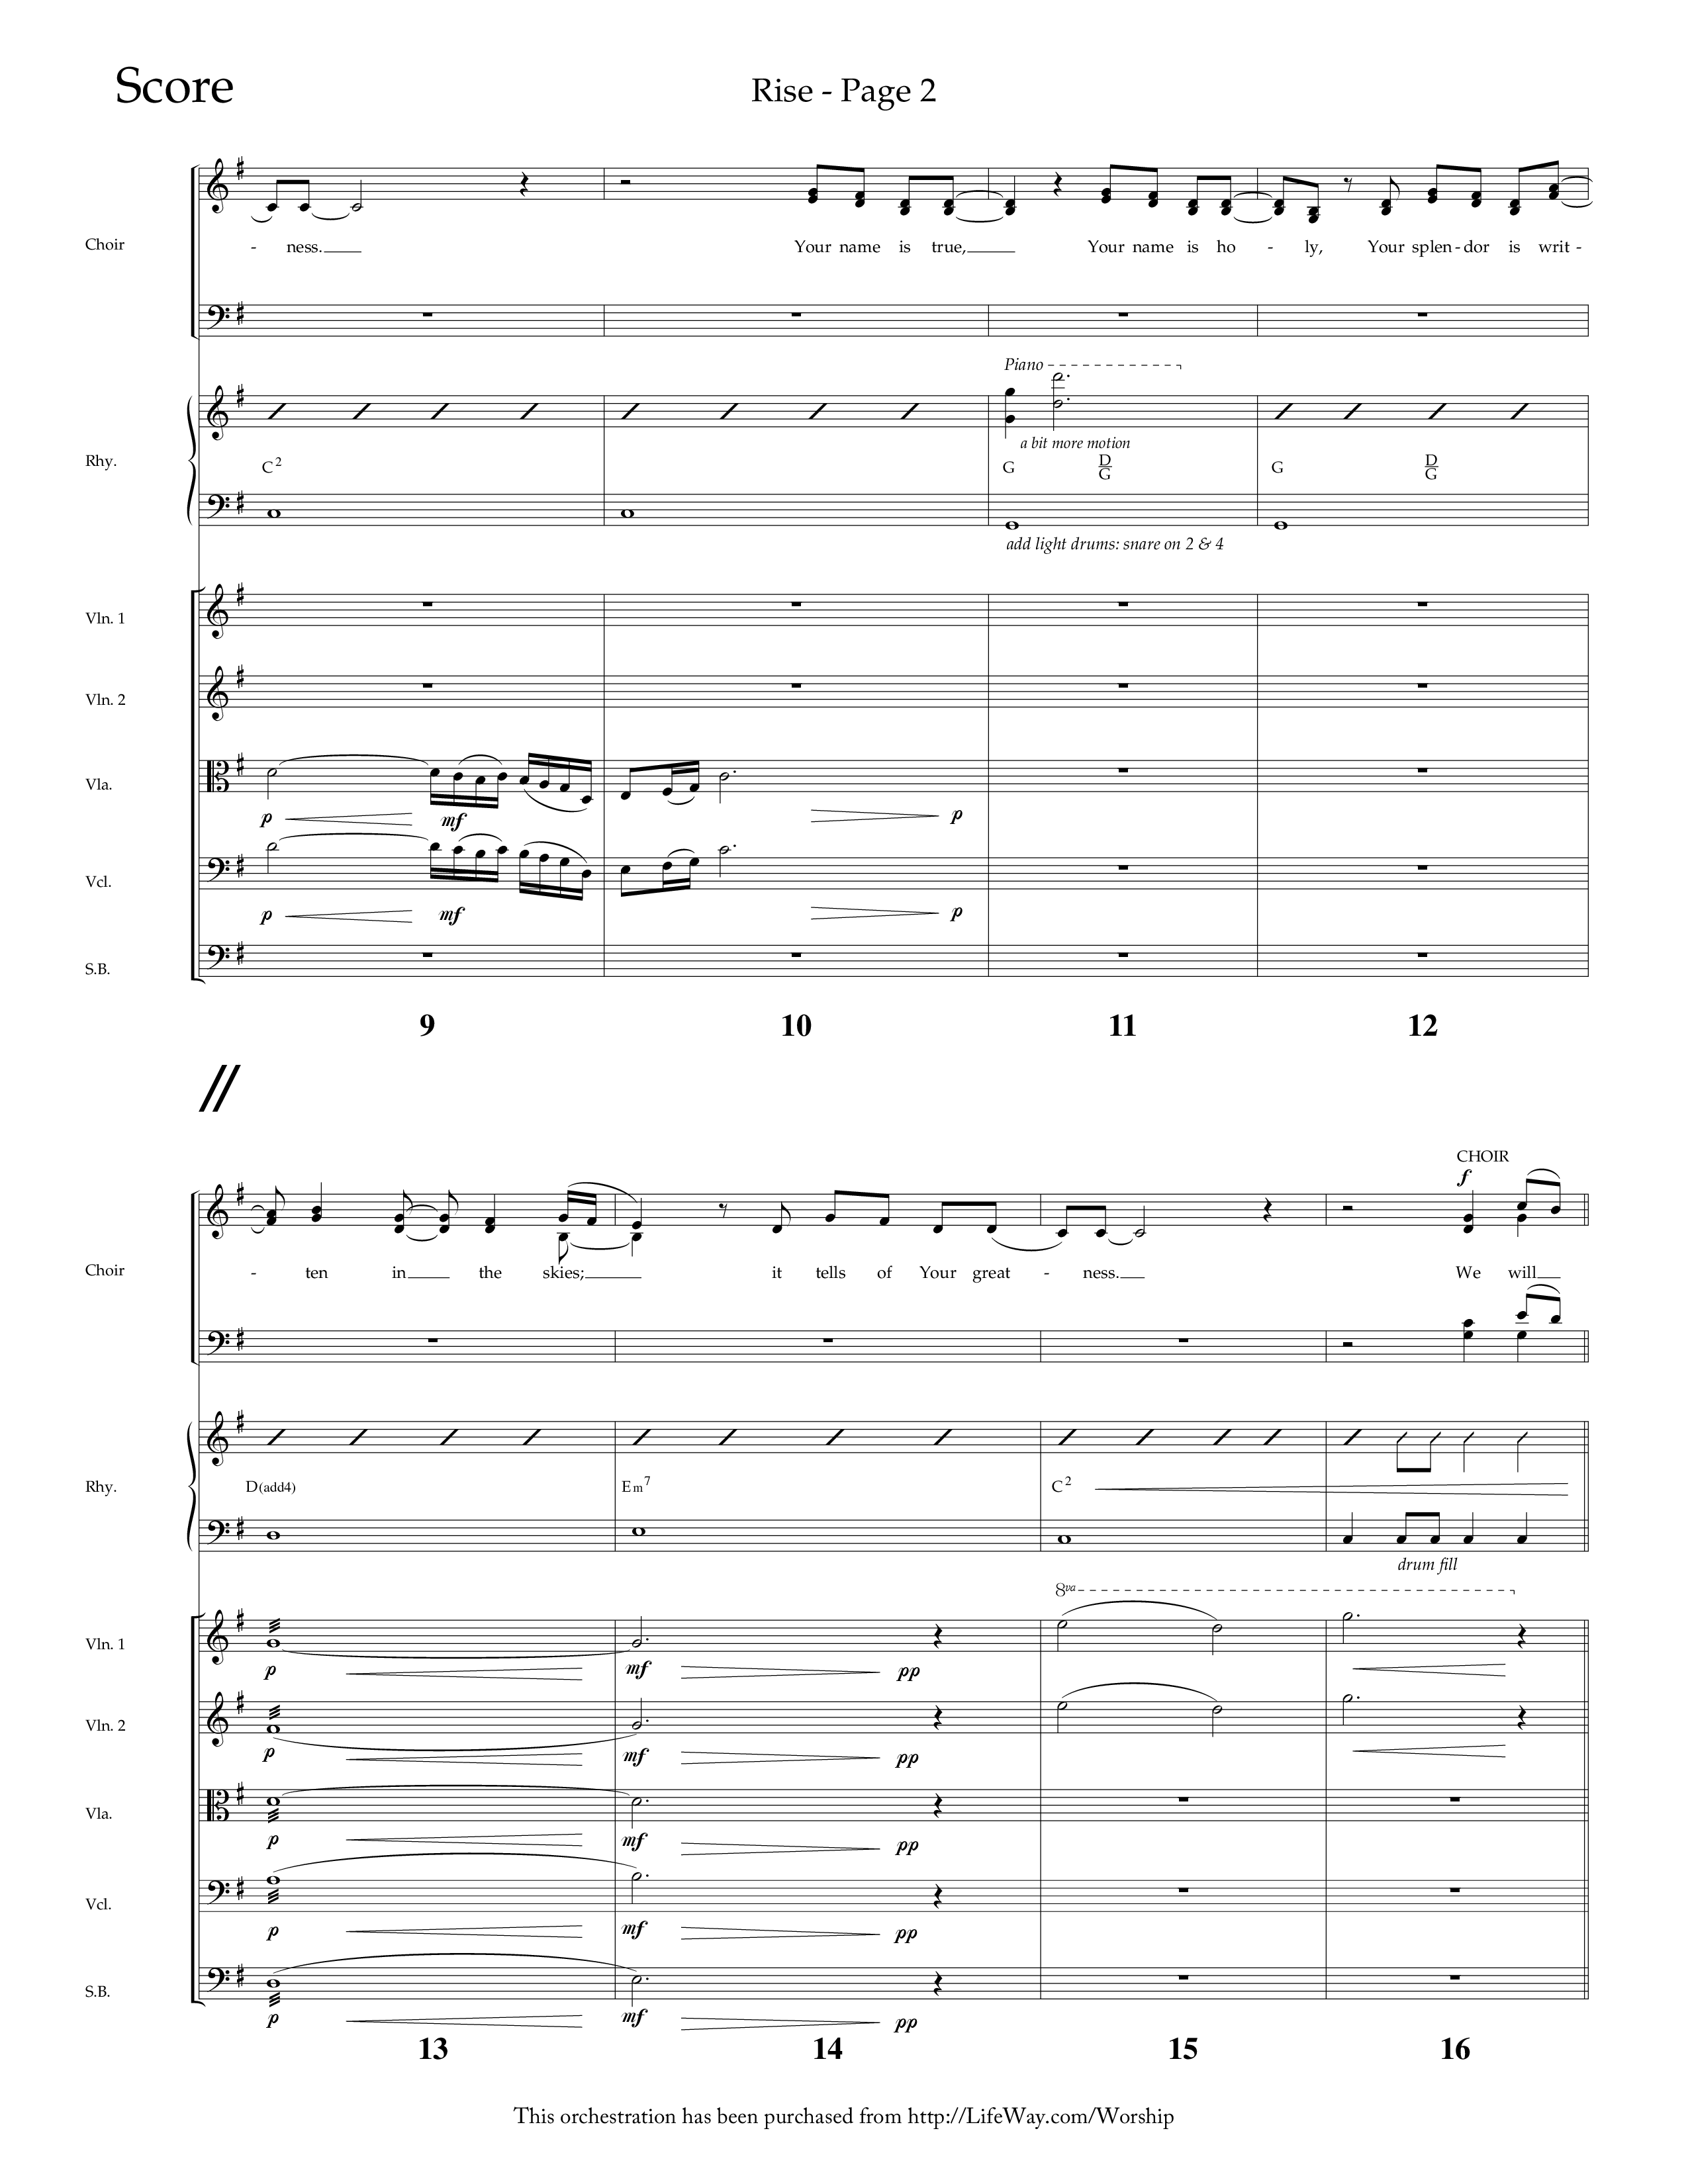 Rise (Choral Anthem SATB) Conductor's Score (Lifeway Choral / Arr. Bruce Cokeroft / Orch. Craig Adams)